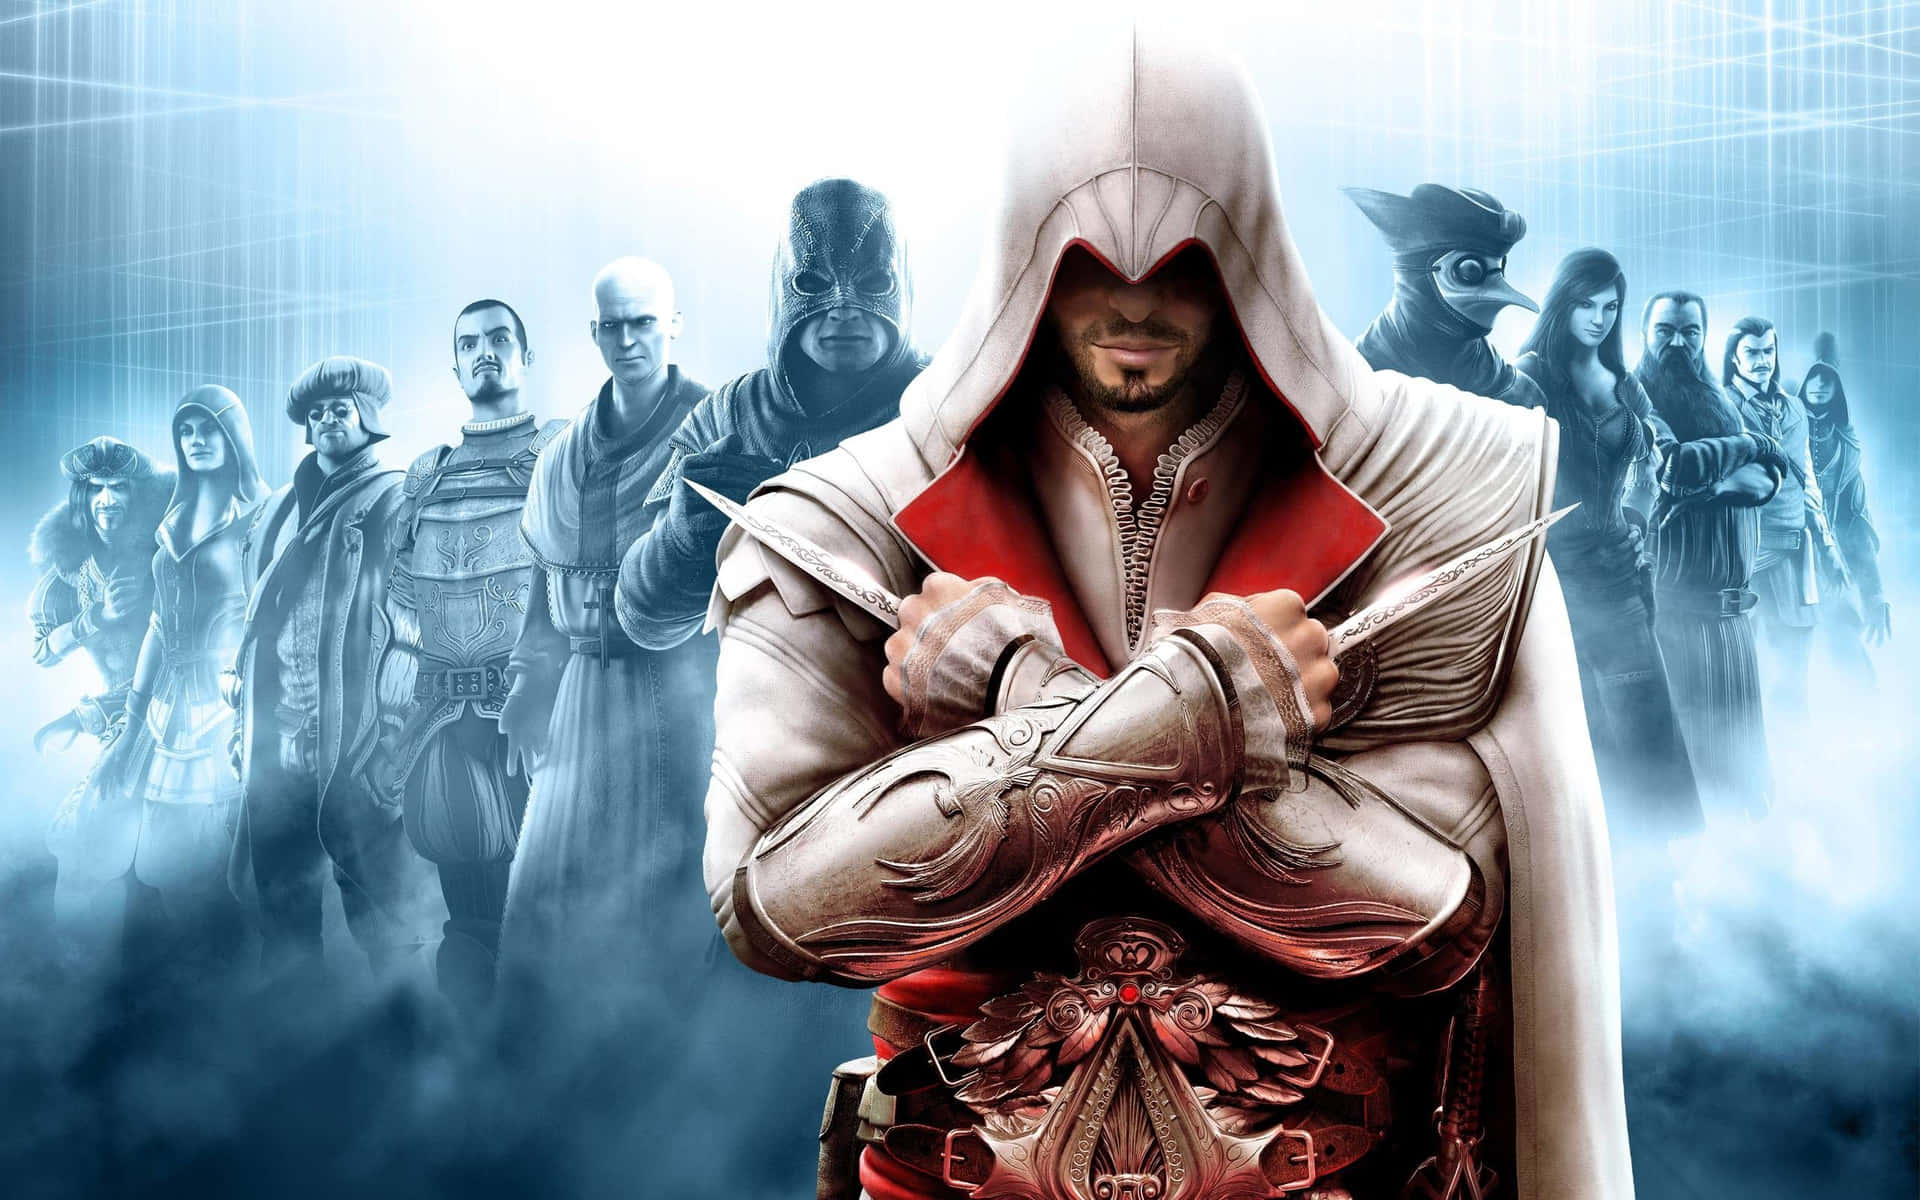 Escenacautivadora Del Juego Assassin's Creed Brotherhood. Fondo de pantalla